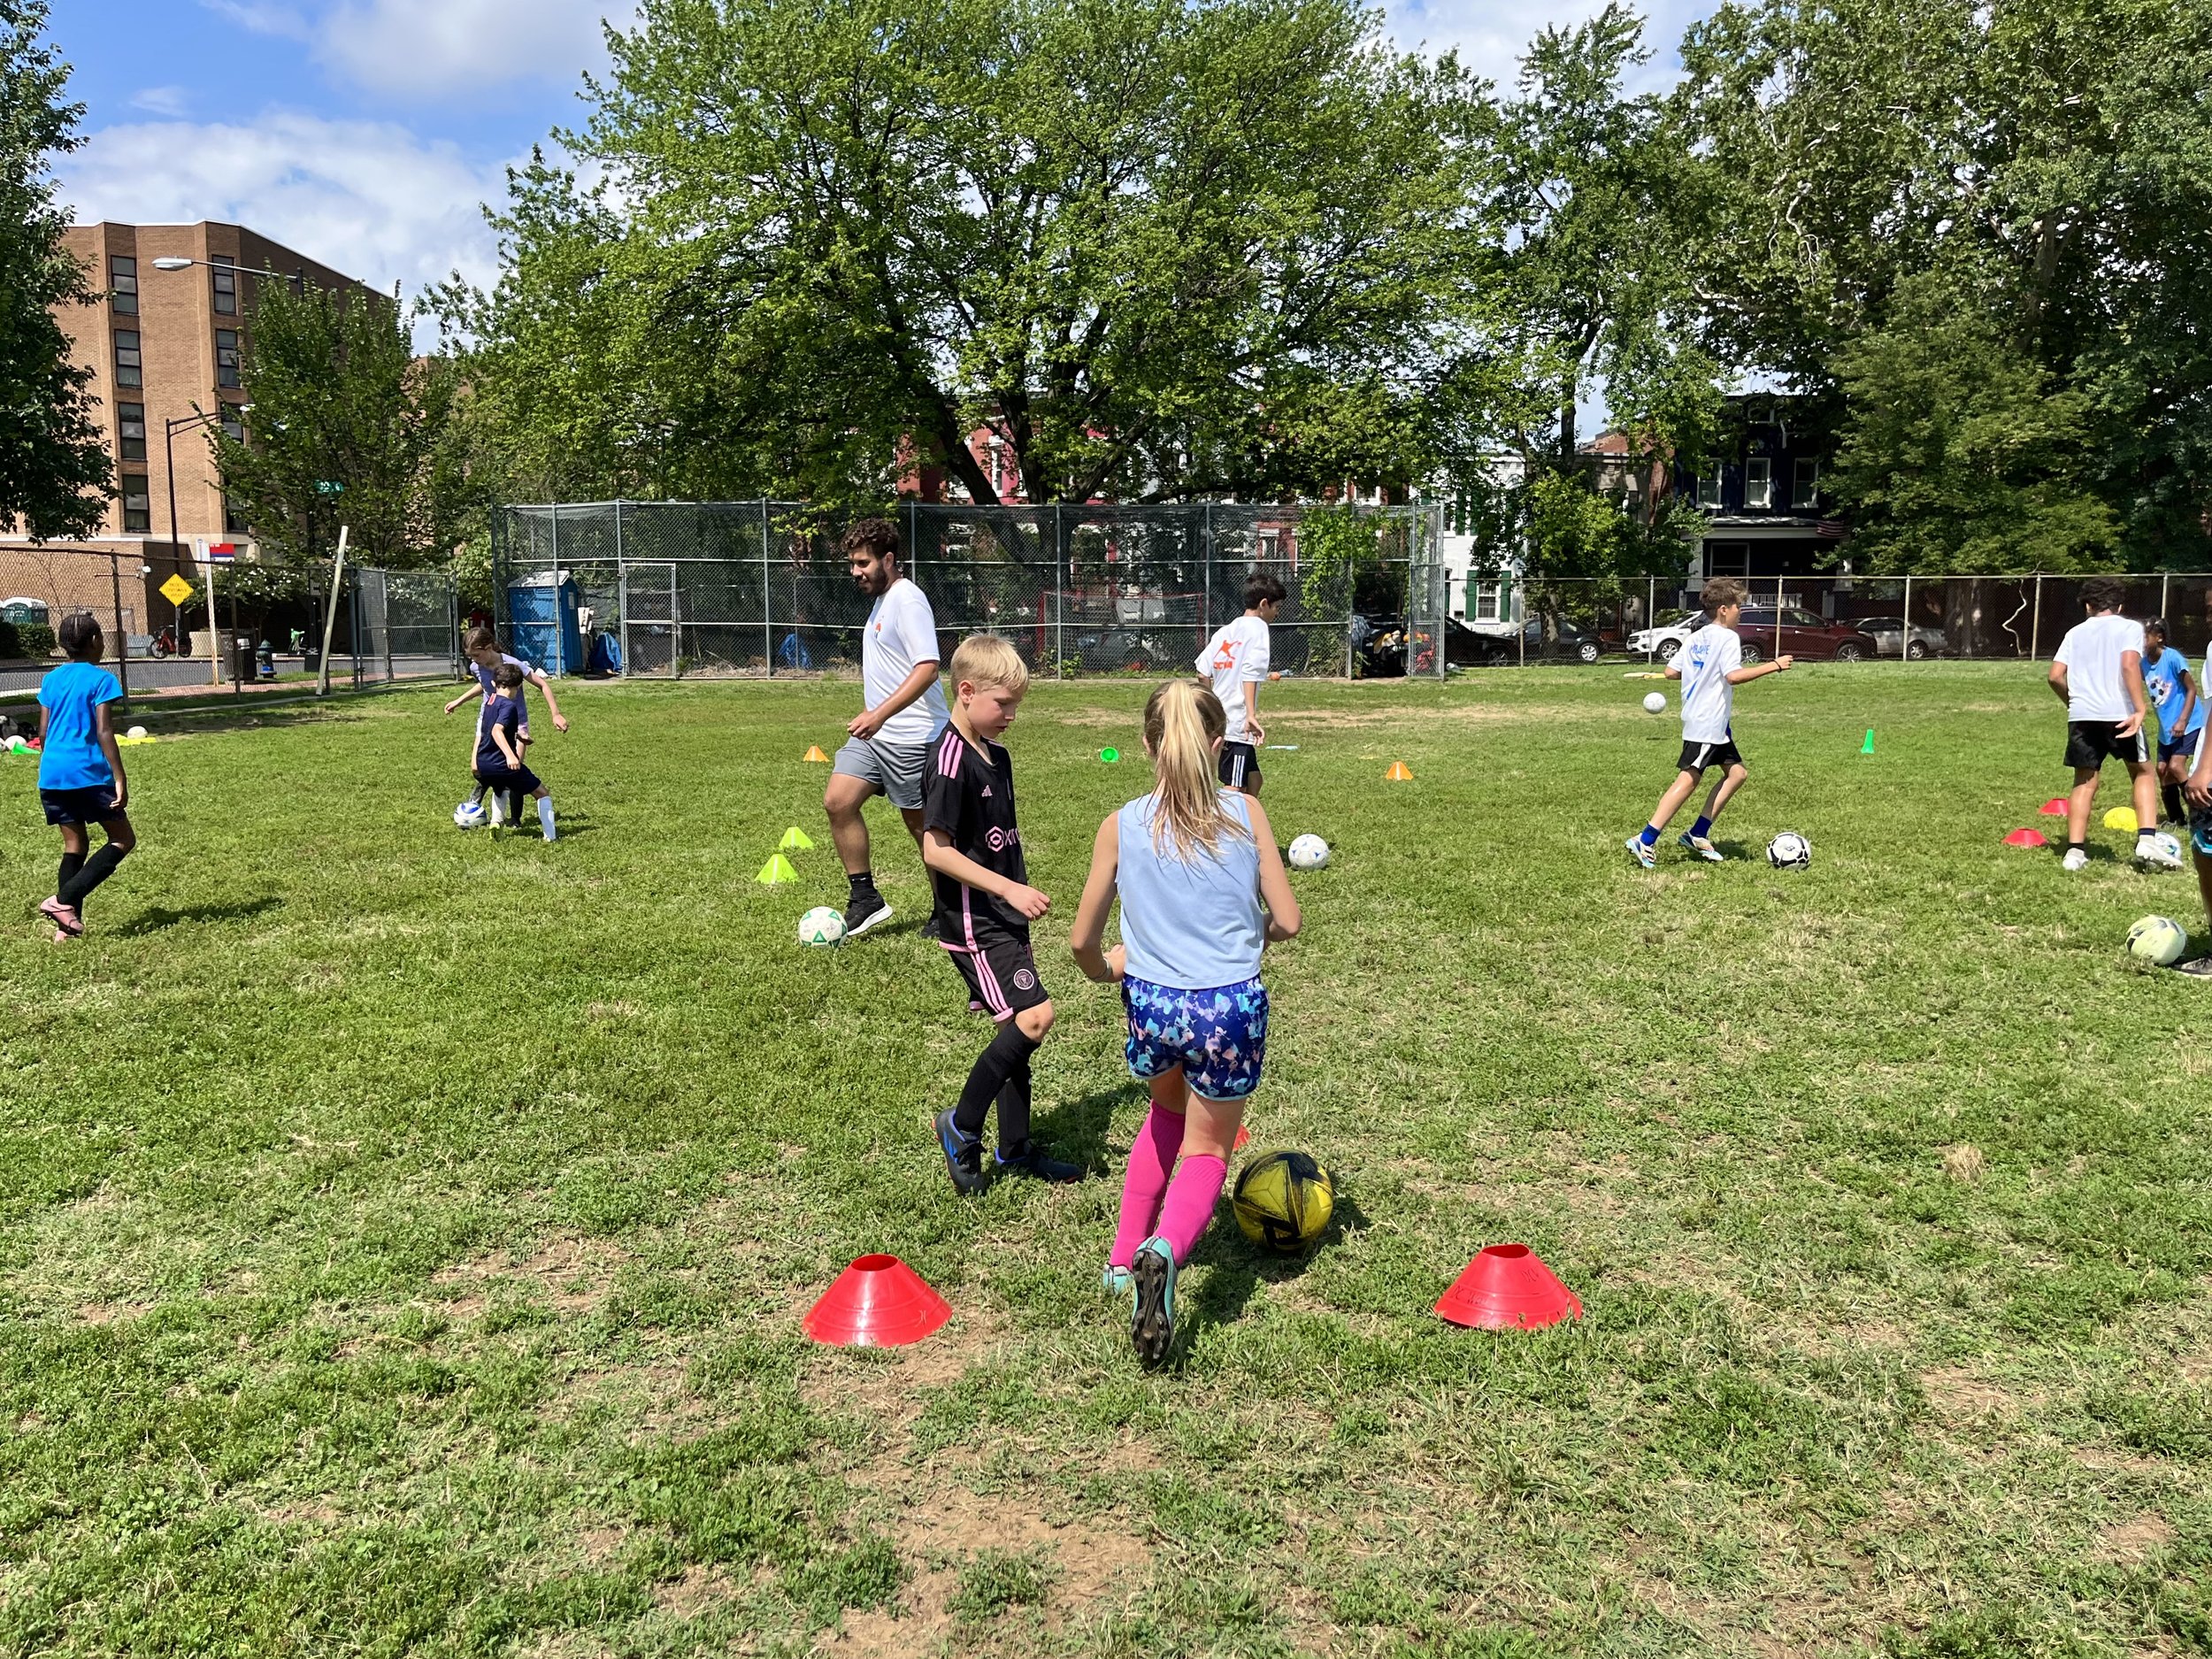 Dc-way-soccer-club-for-kids-in-washington-dc-summer-camp-at-tyler-elementary-school- 8567.jpeg